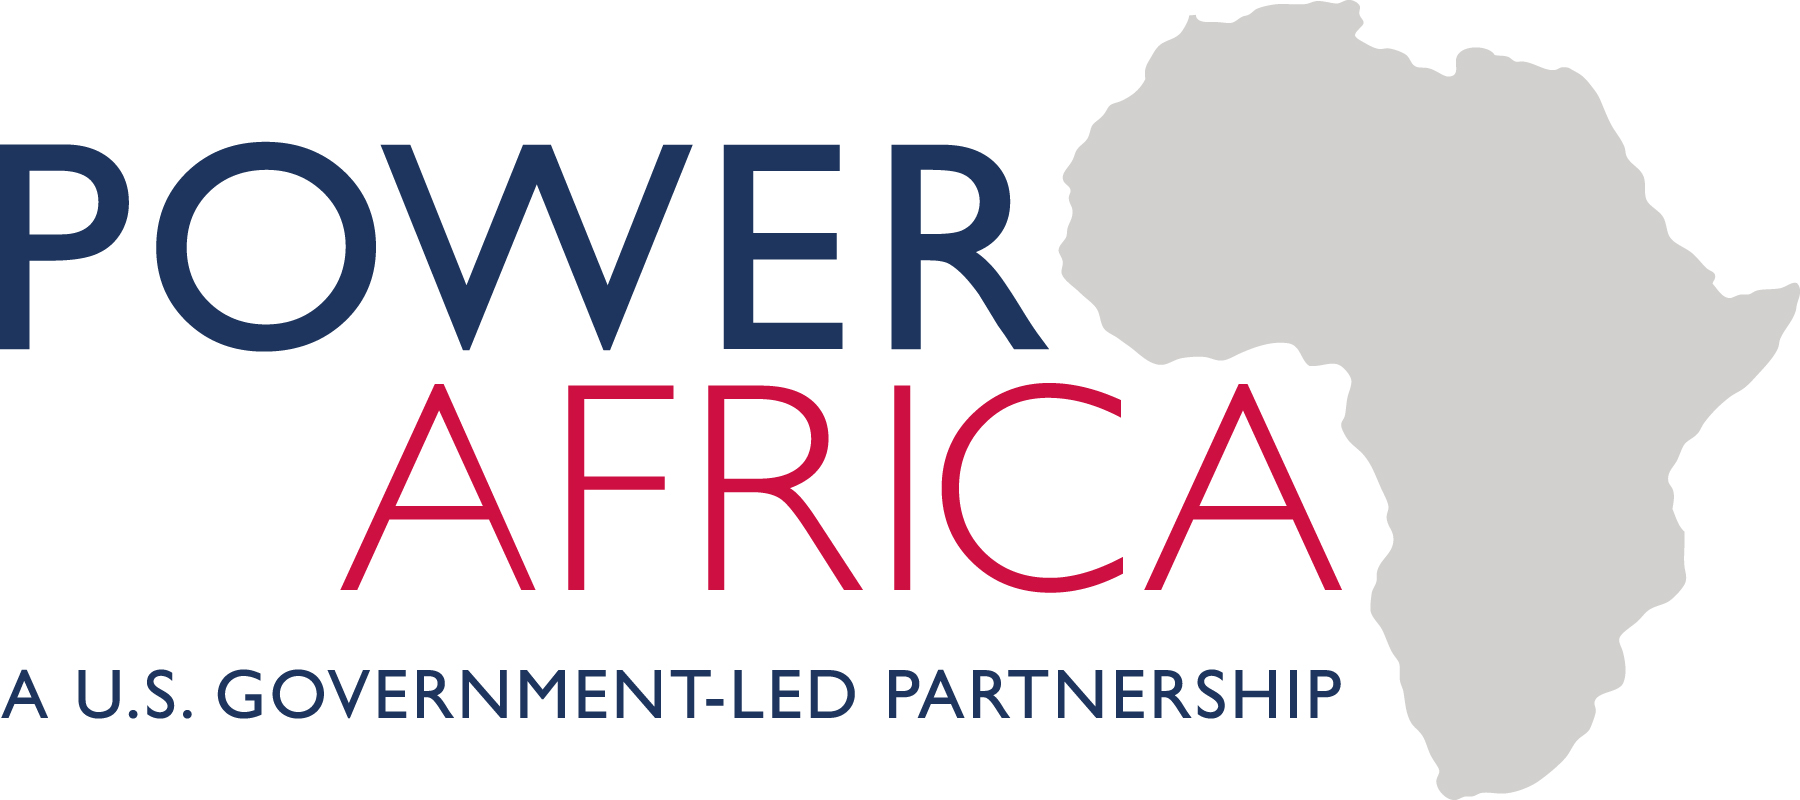 Power Africa logo